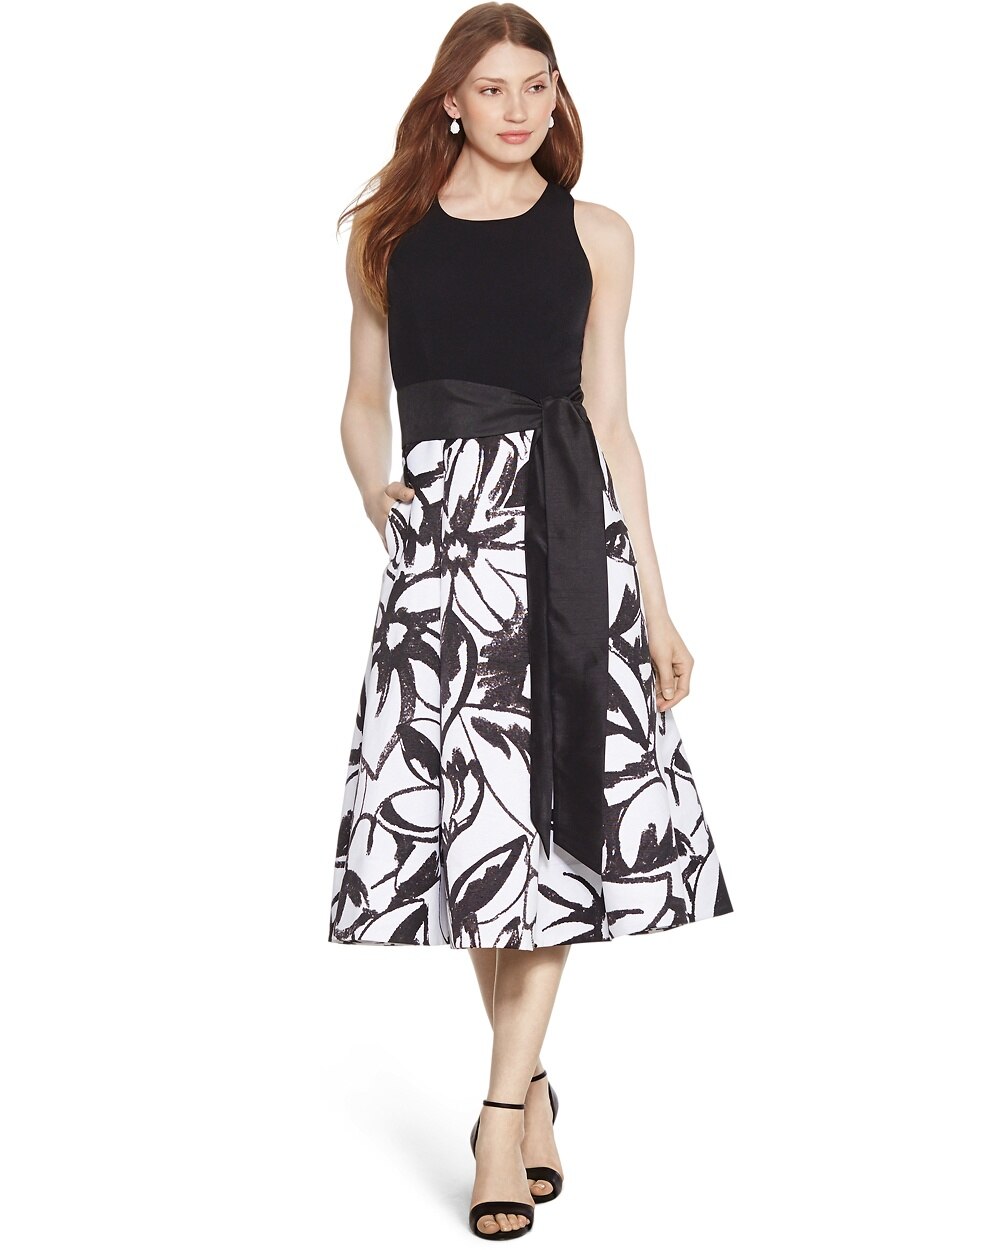 Halter Black and White Print Midi Dress - Shop Dresses for Women ...